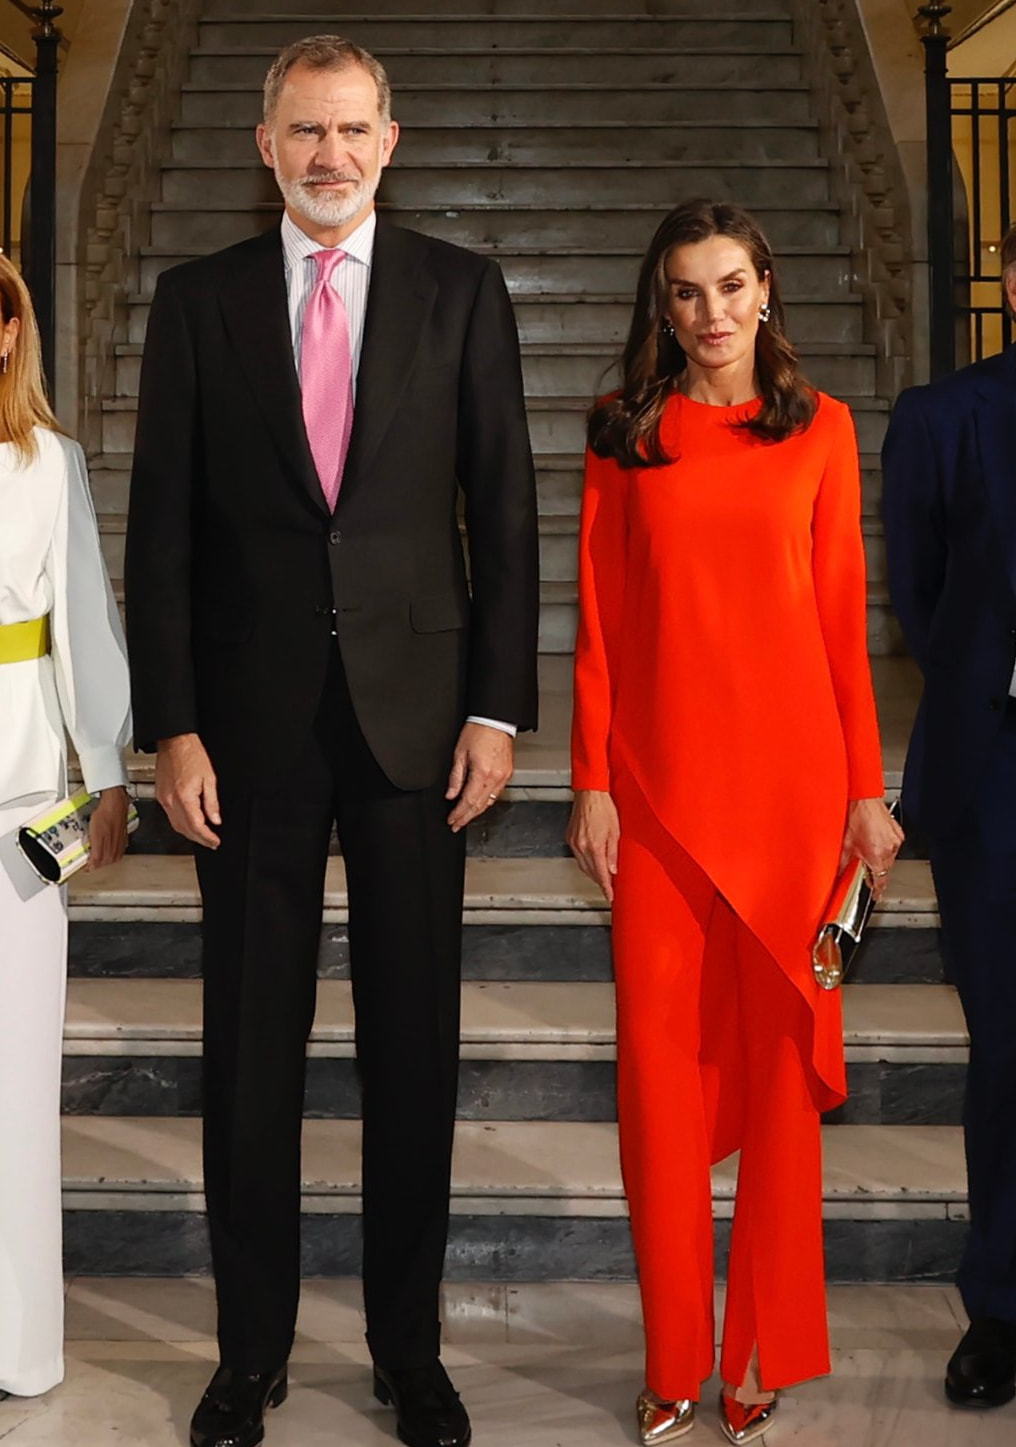 King Felipe VI and Queen Letizia presided over a literary event held at the Círculo de Bellas Artes in Madrid to commemorate the centenary of the Casa del Libro on 30th March 2023